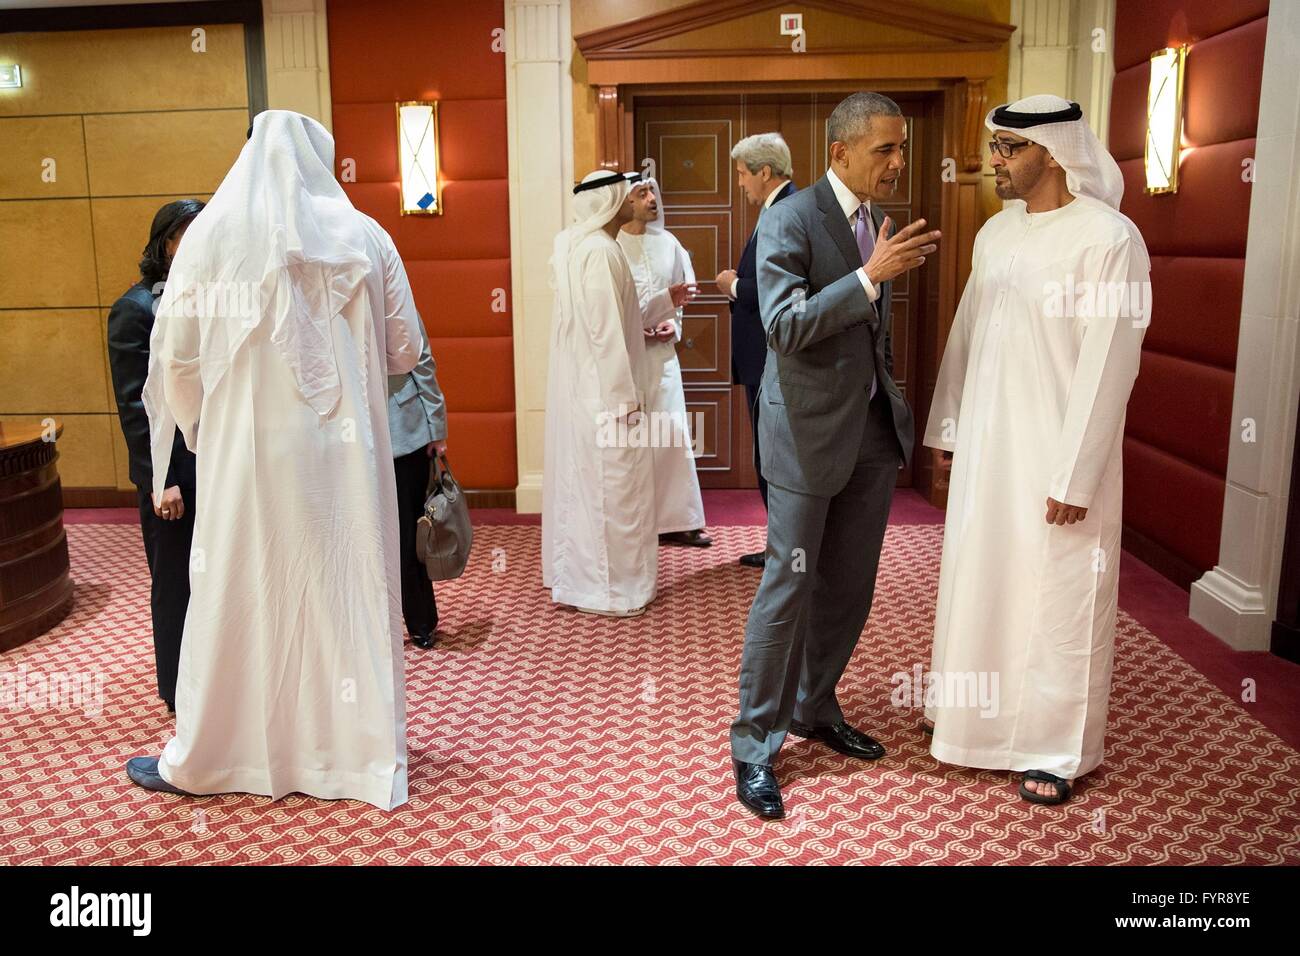 U.S President Barack Obama talks with Sheikh Mohamed Bin Zayed Al Nahyan, Crown Prince of Abu Dhabi, following their bilateral meeting April 20, 2016 in Riyadh, Saudi Arabia. Stock Photo